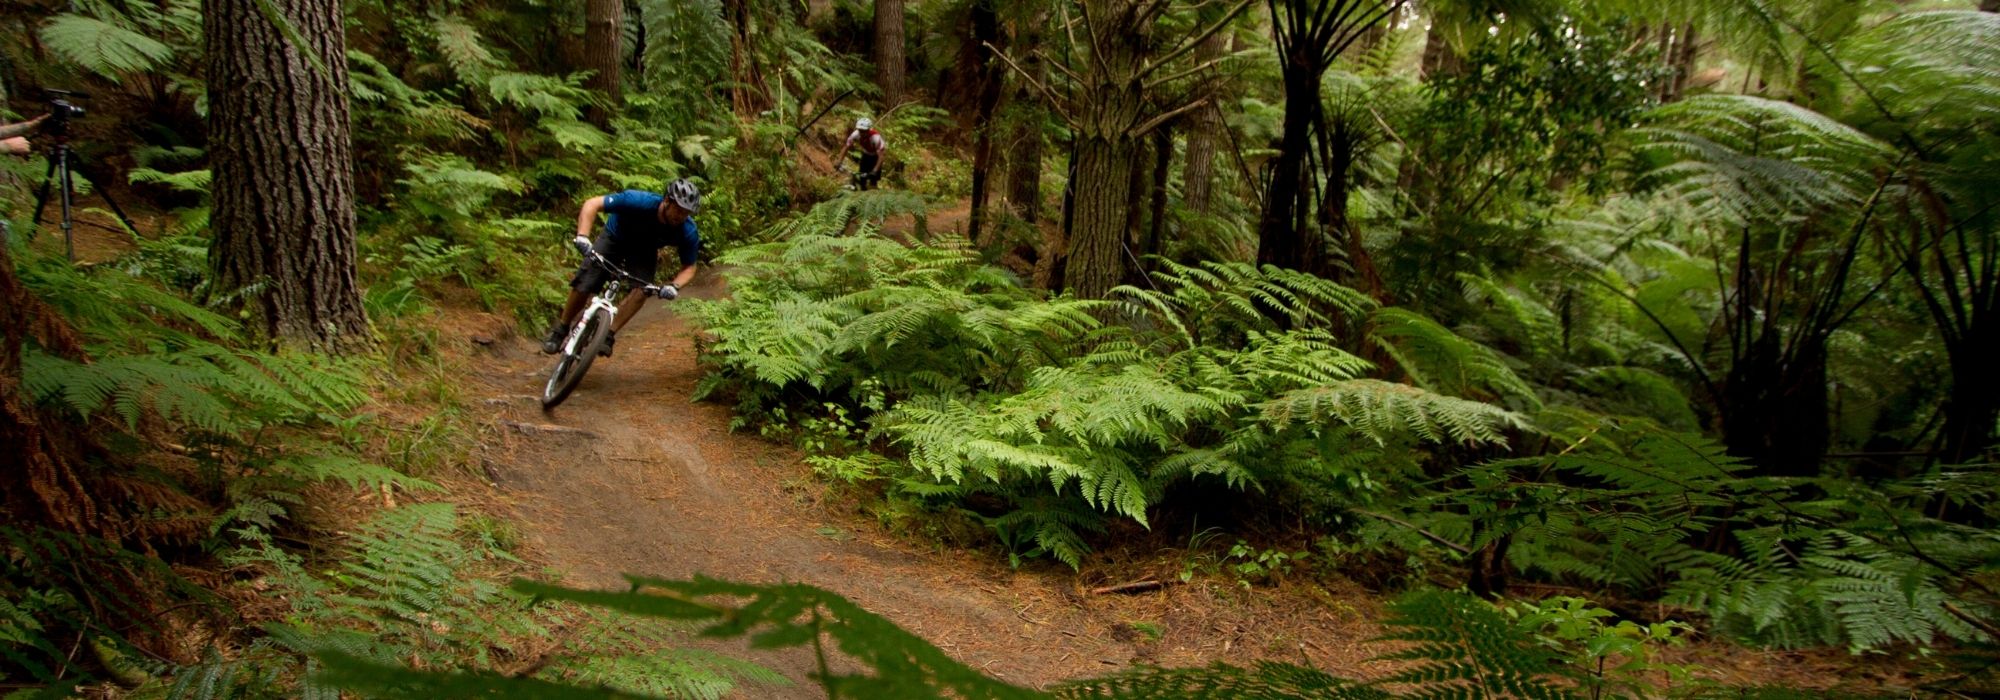 Rotorua retains its gold-level mountain biking status